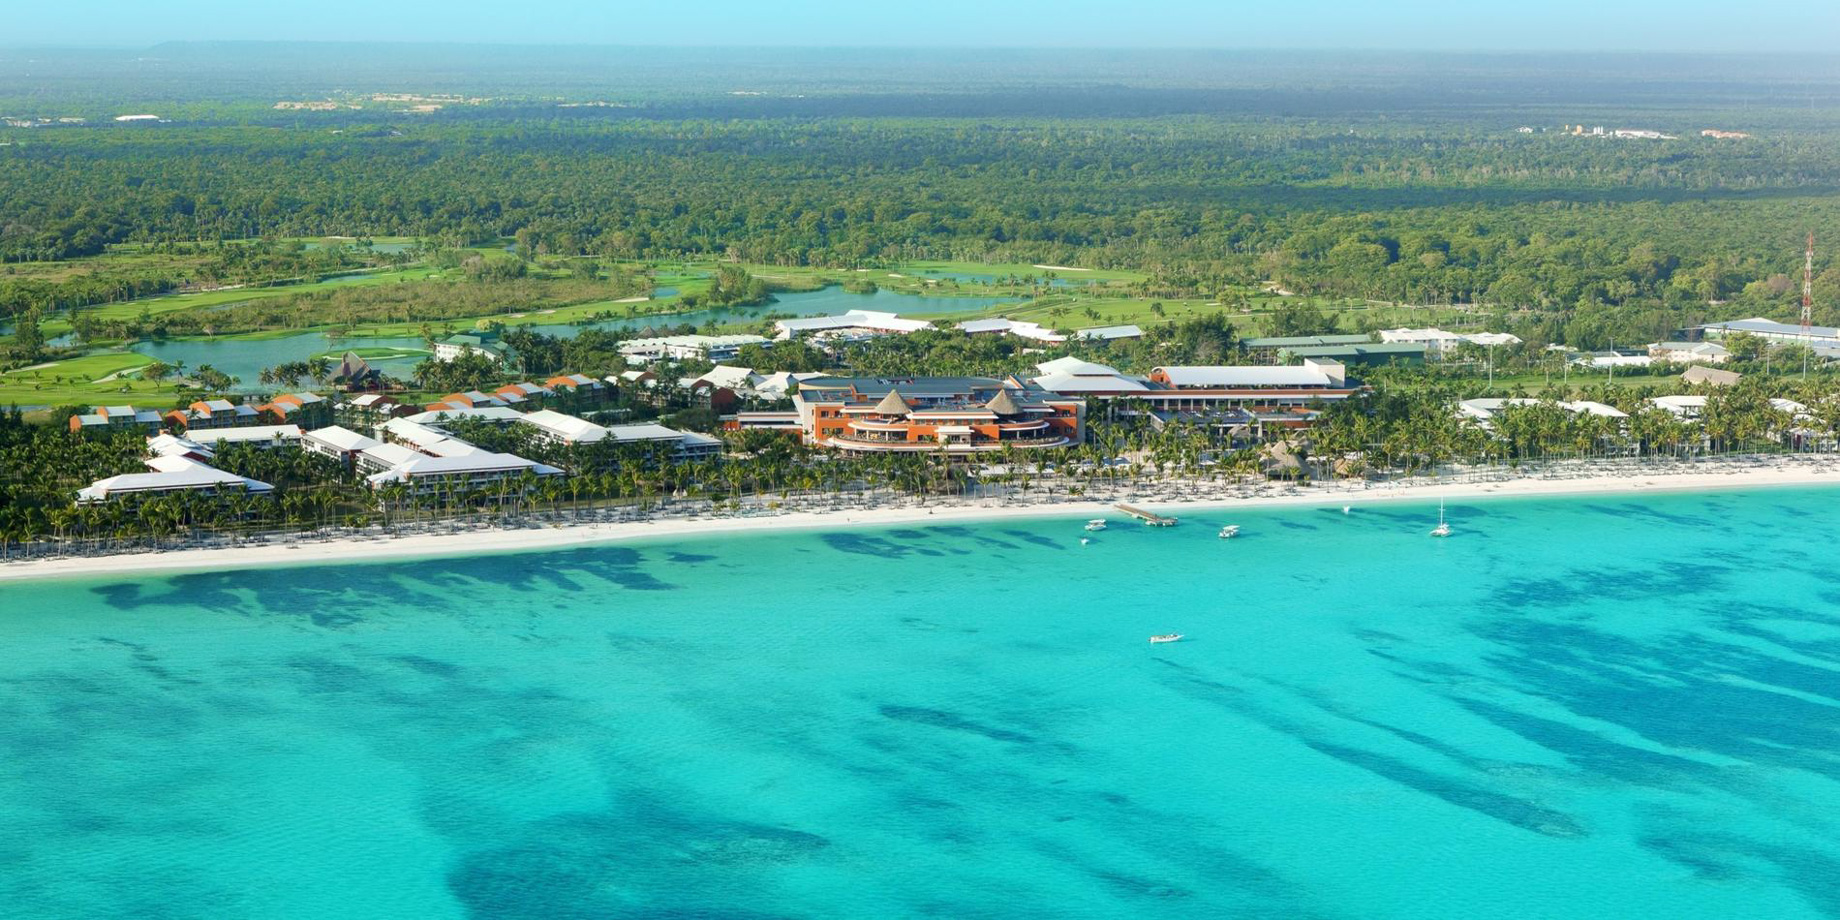 Barceló Bávaro Palace Hotel Grand Resort – Punta Cana, Dominican Republic – Resort Aerial View